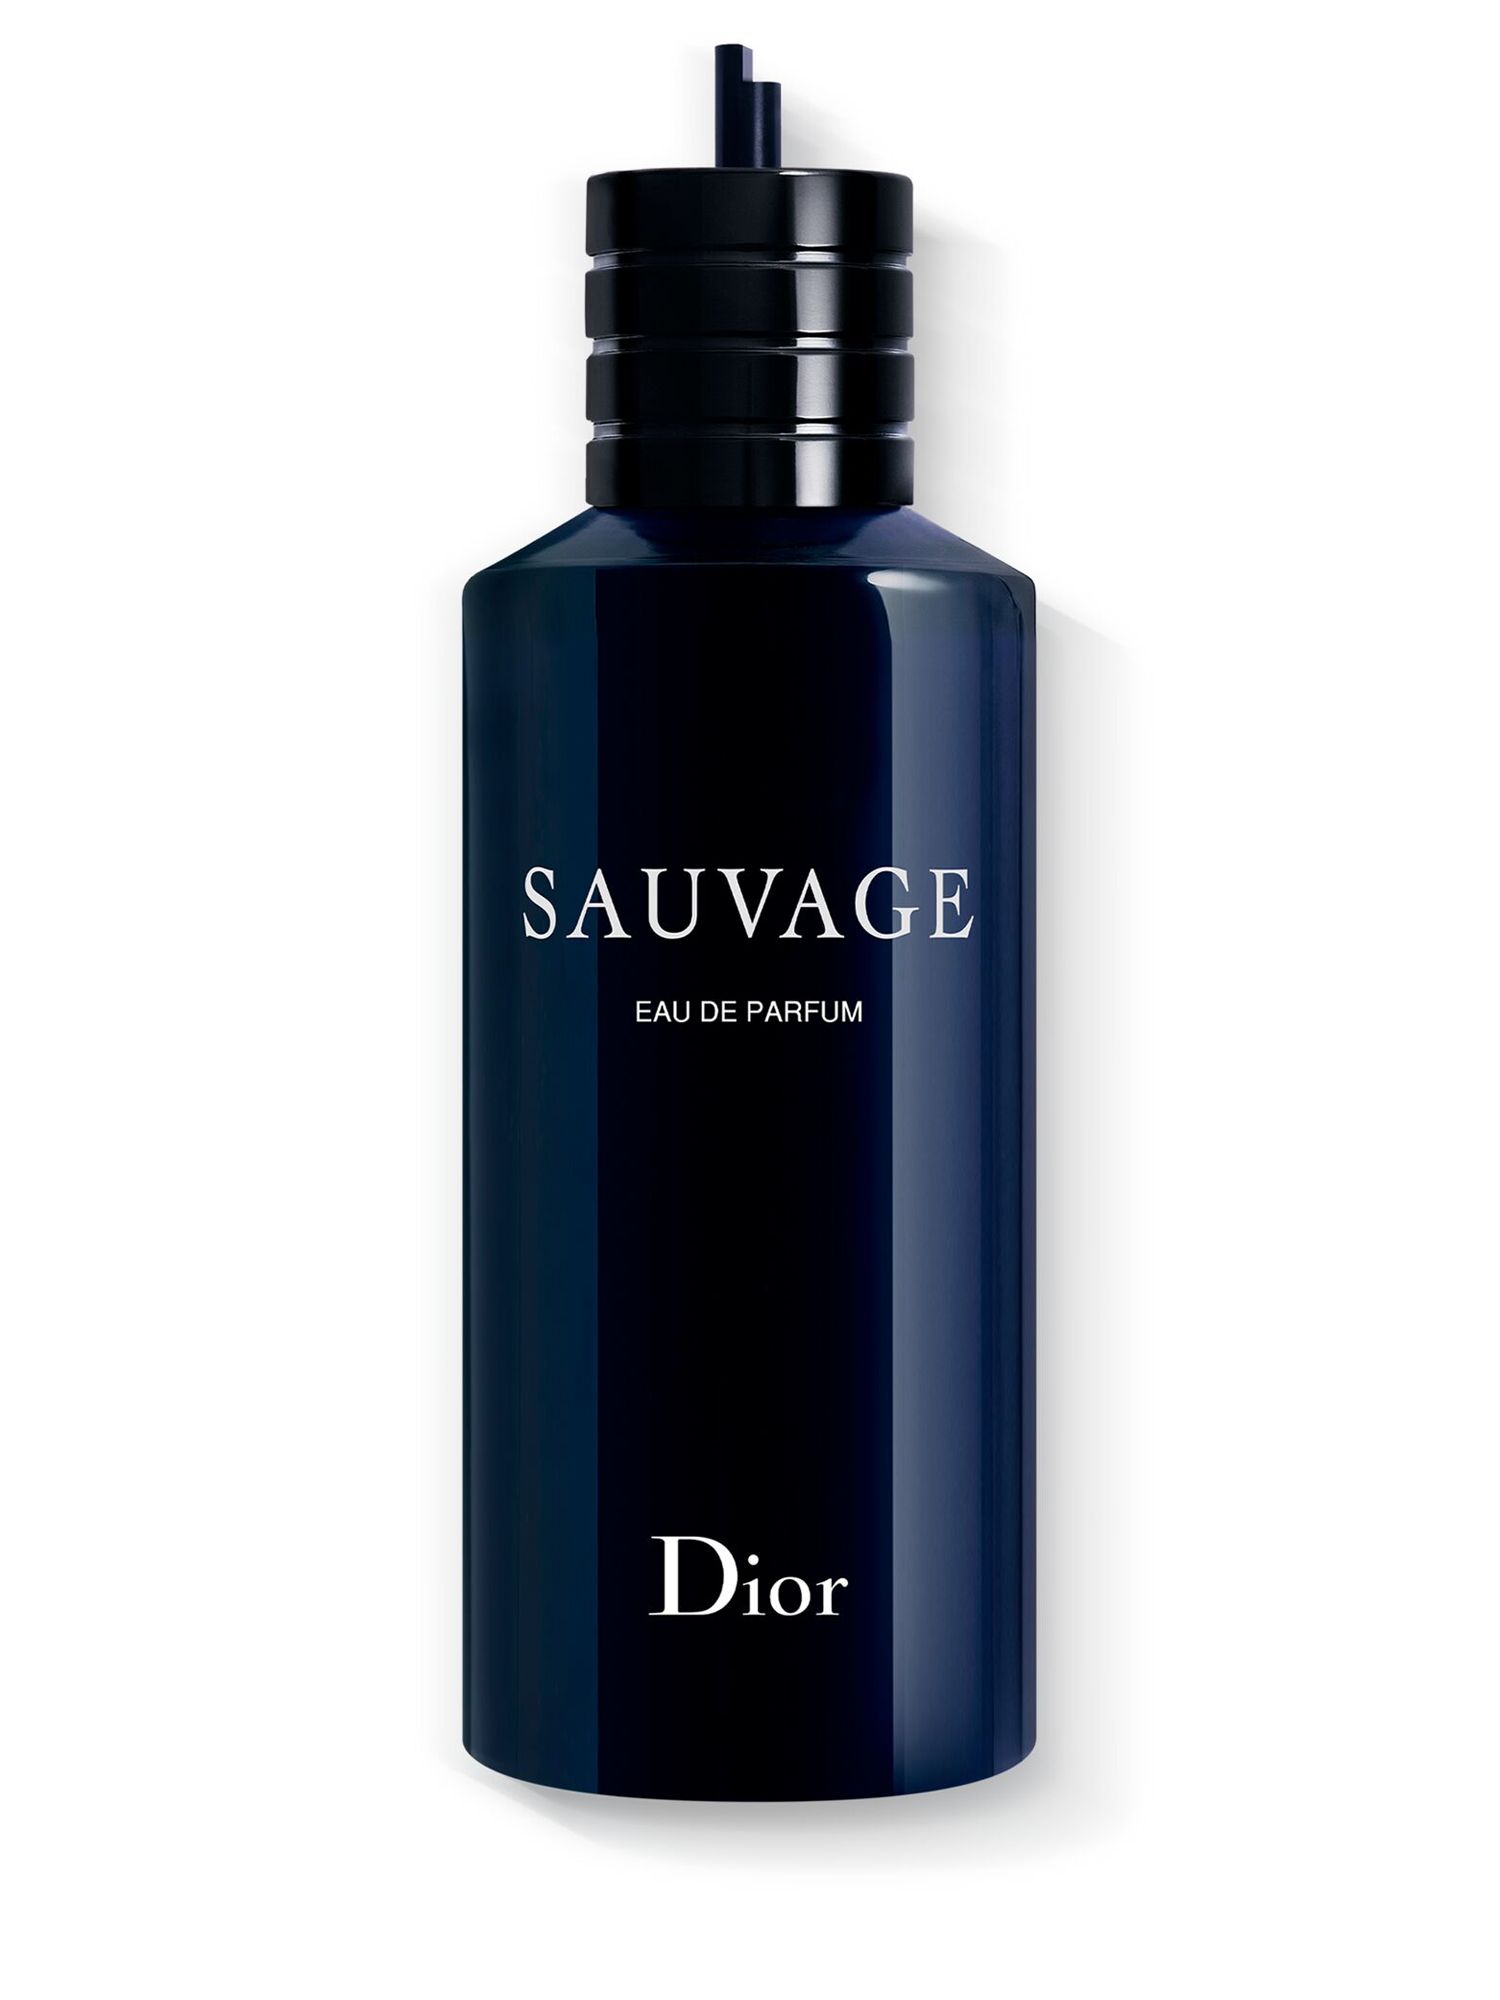 DIOR Sauvage Eau de Parfum Refill, 300ml